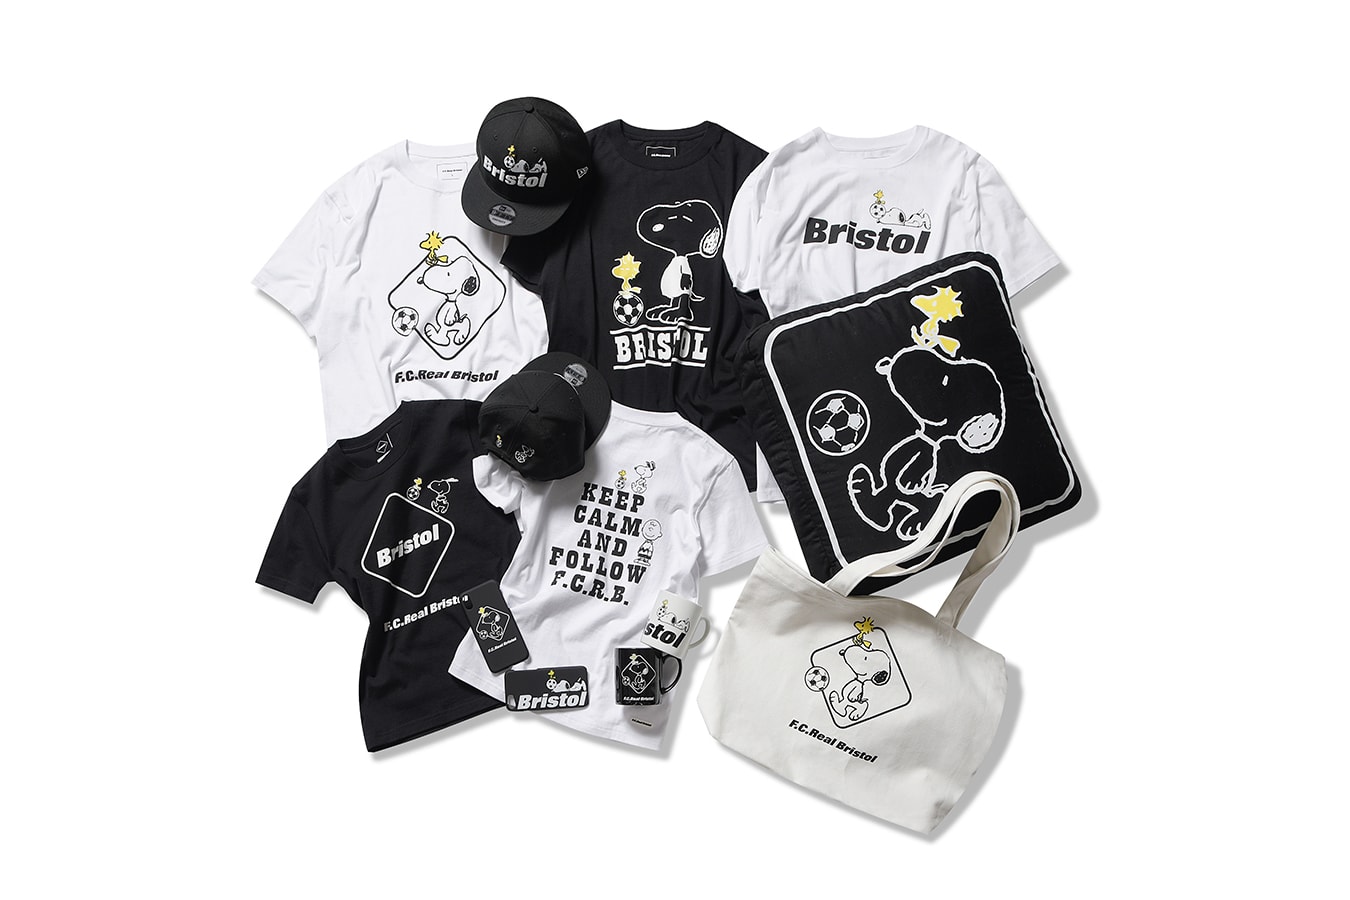 F C Real Bristol peanuts collaboration clothing tee shirt bag snoopy hat cap mug sticker phone case may 26 2018